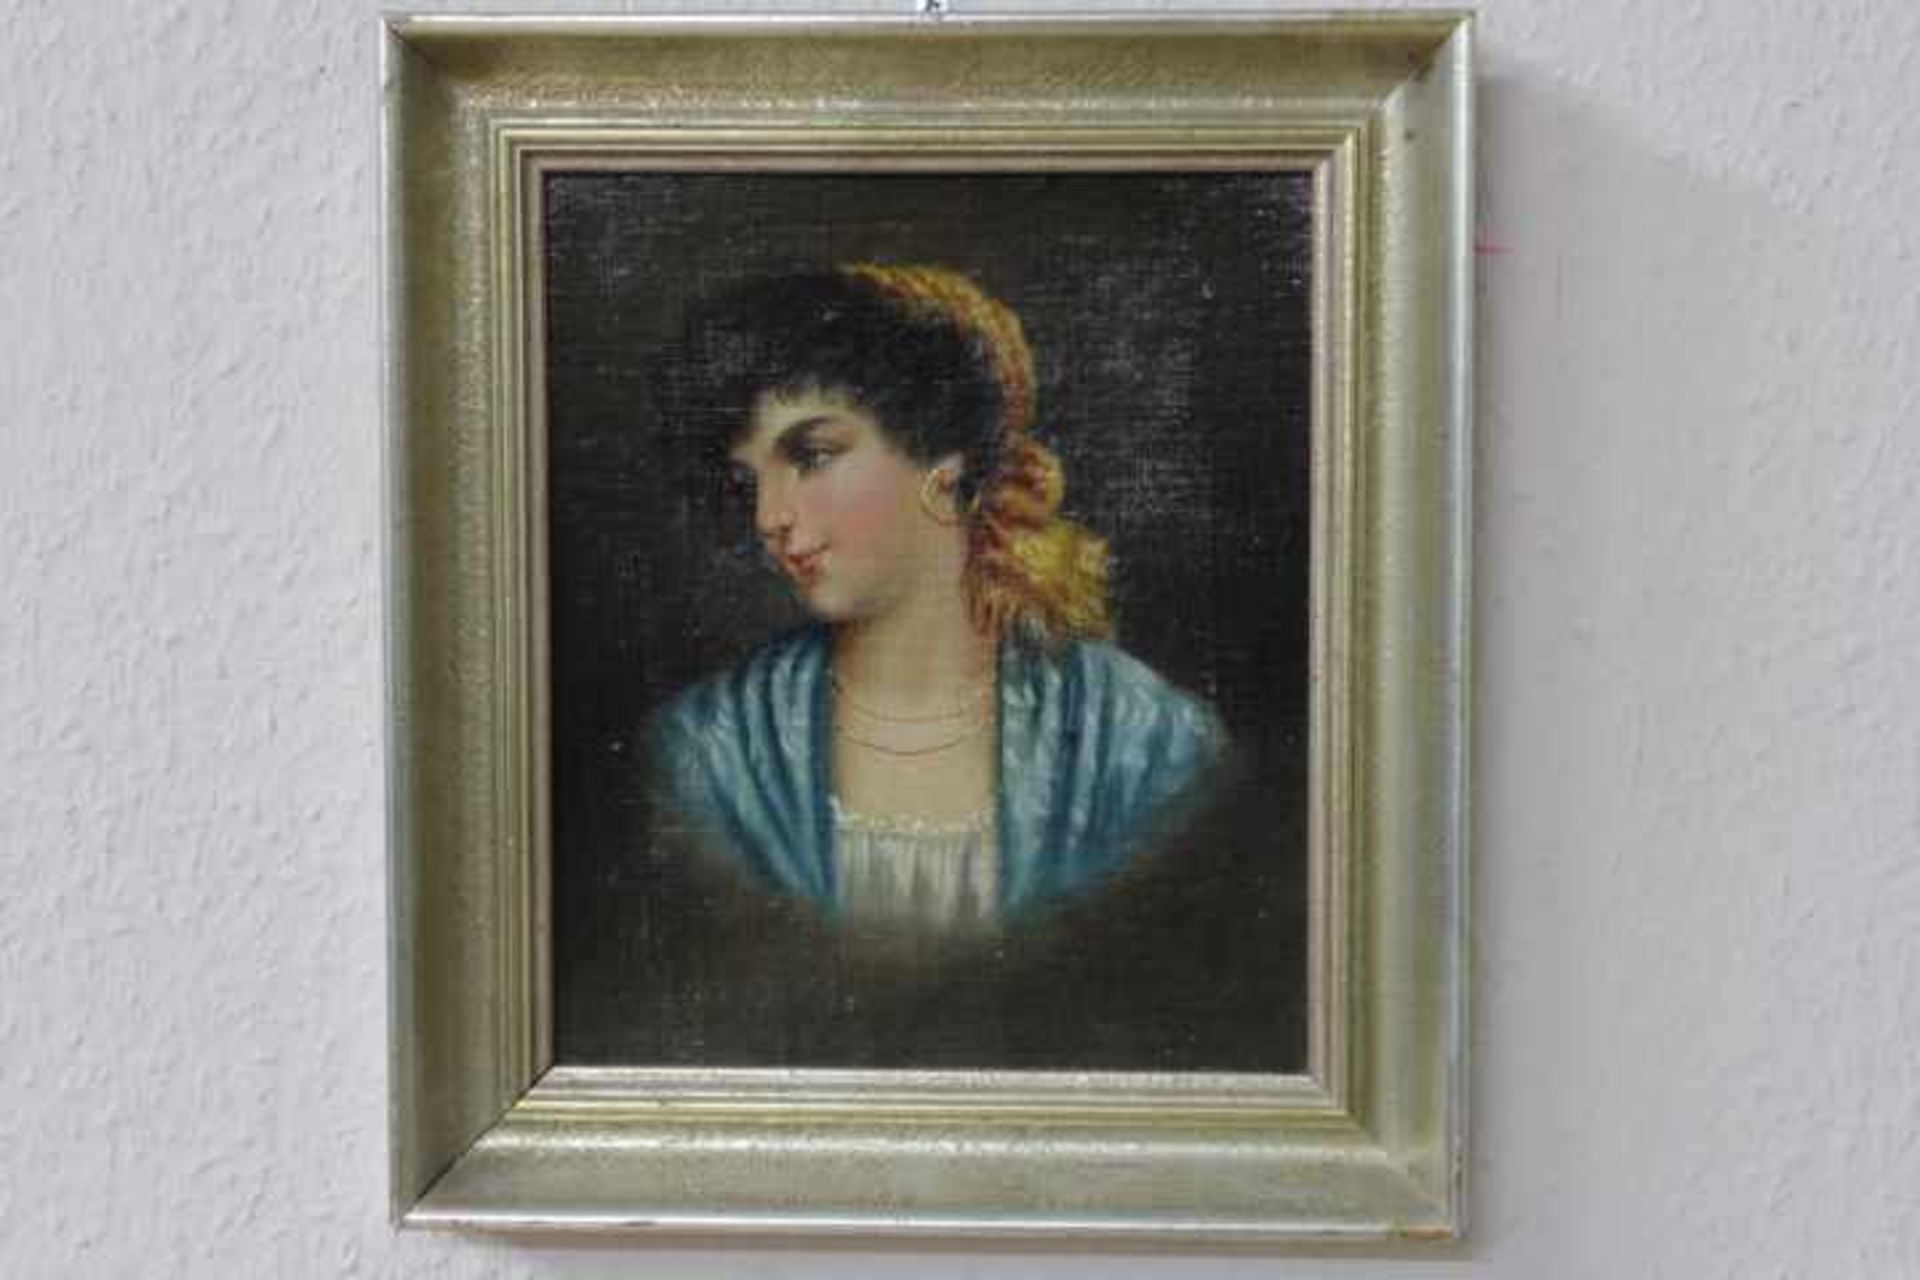 Portrait « Junge Zigeunerin »Fein gemalt Öl/Kartonverso div.handschriftlicheVermerke sowie dat.1.